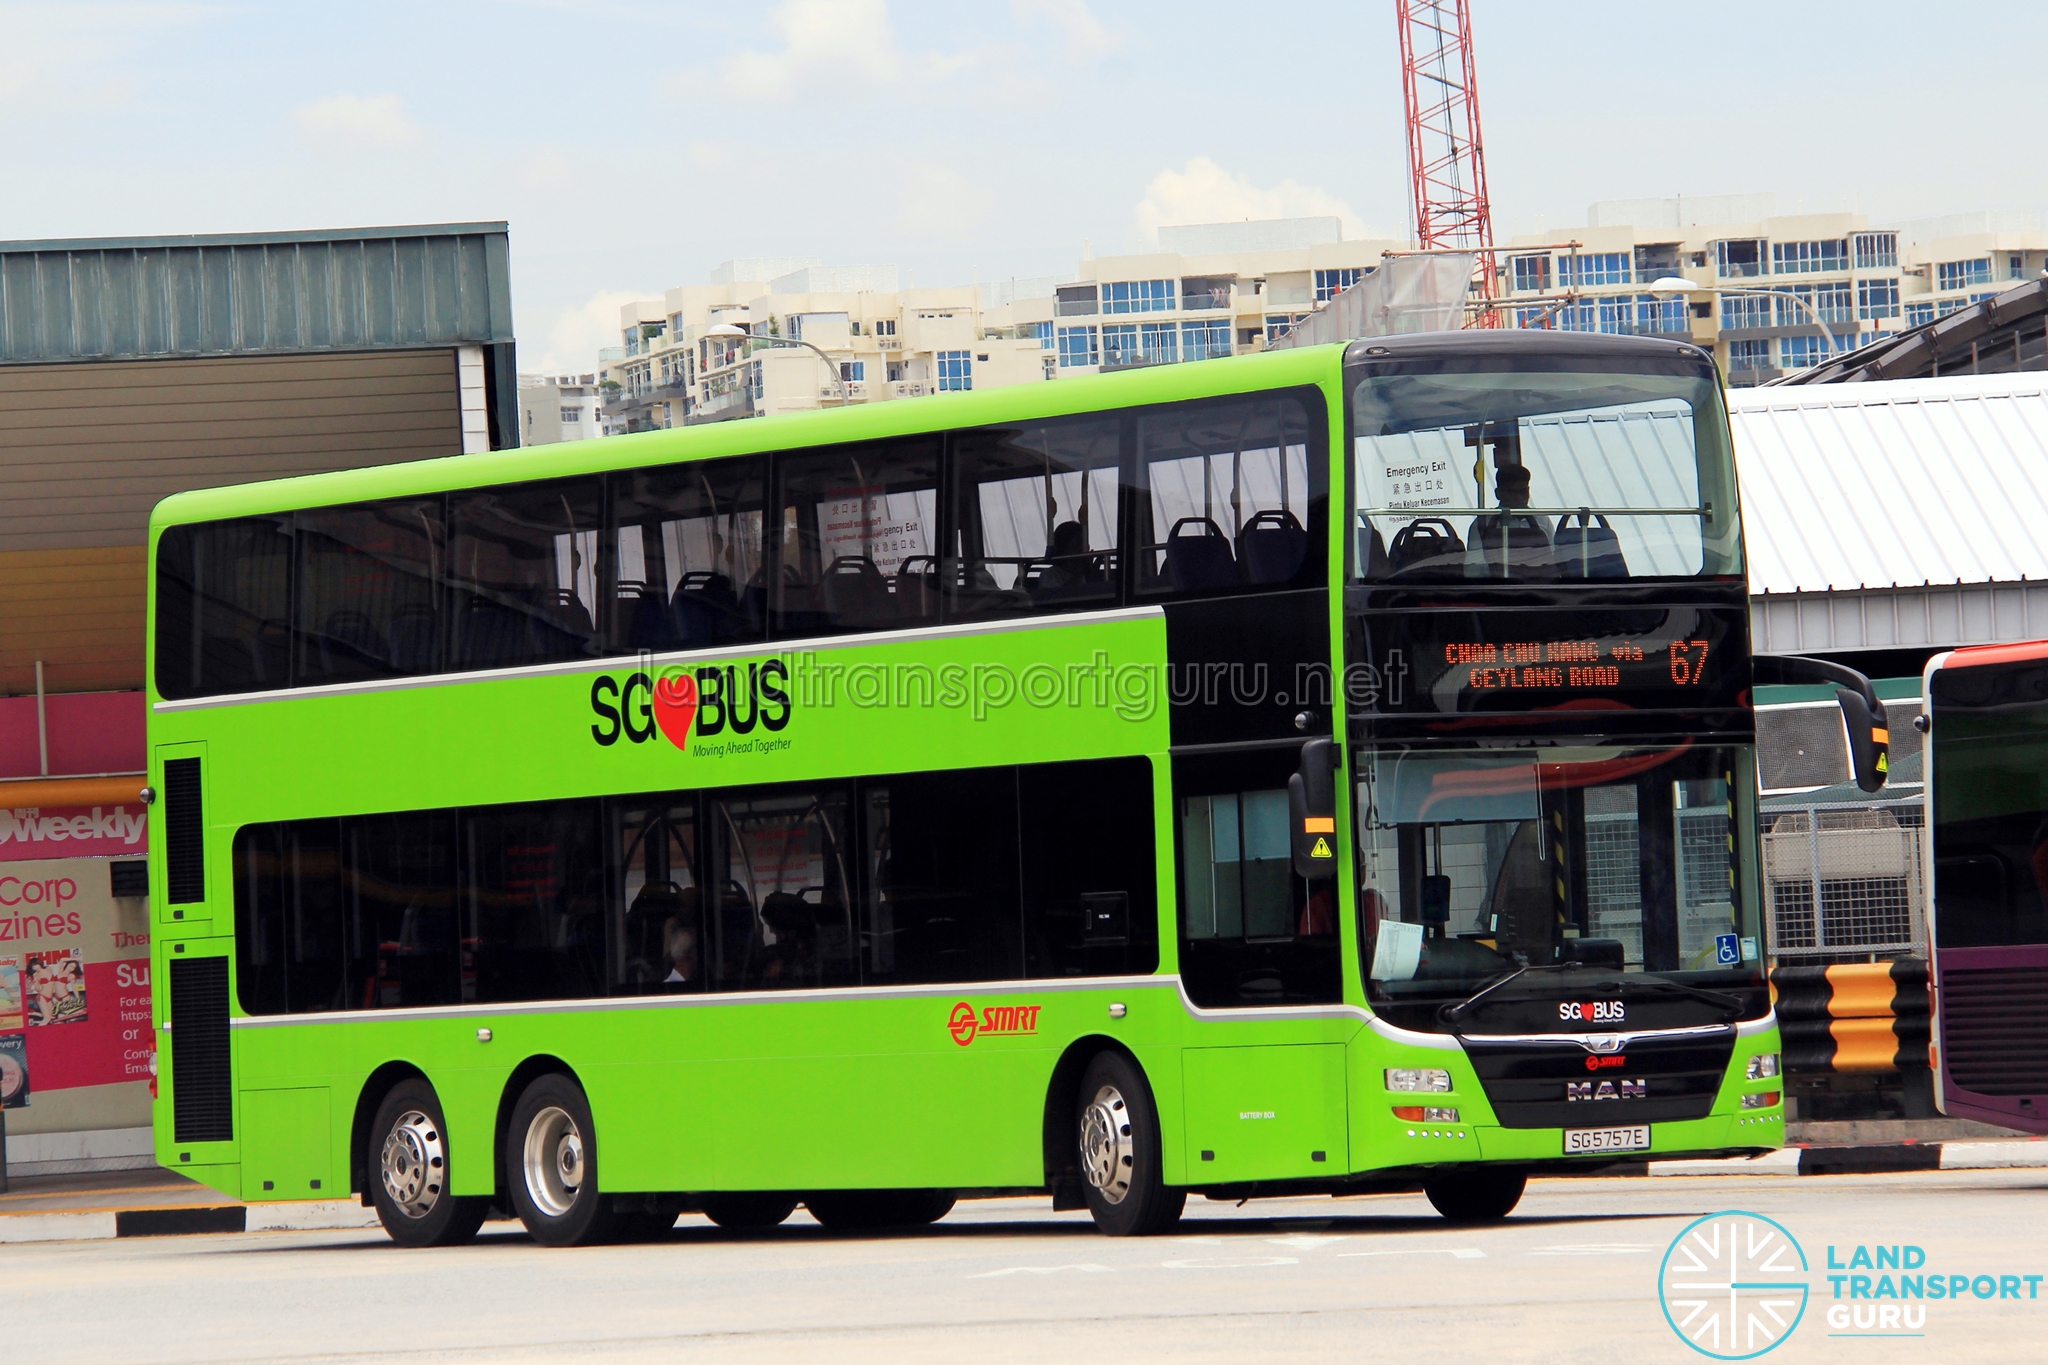 New MAN A95 buses for SMRT Land Transport Guru